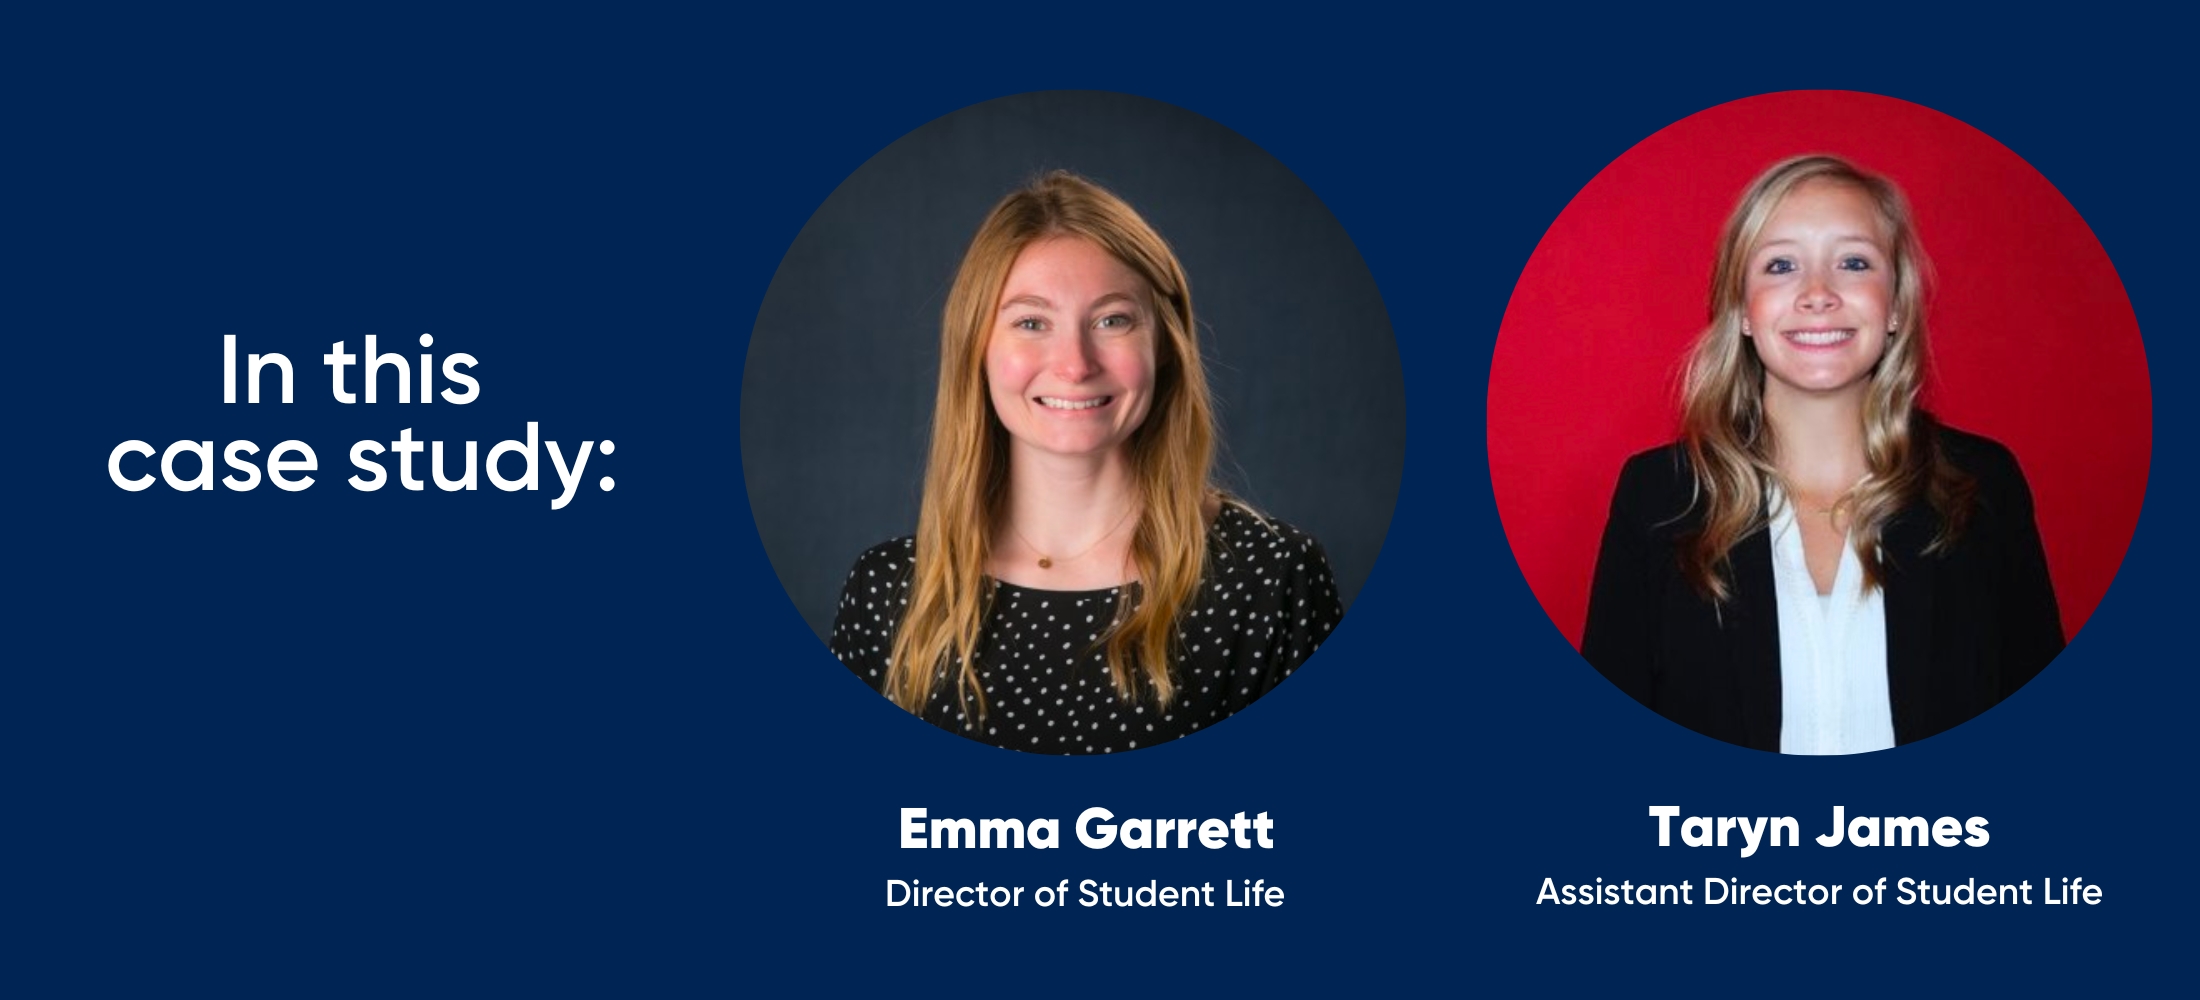 in this case study: Emma Garrett - Director of Student Life and Director of Student Life, Assistant Director of Student Life 